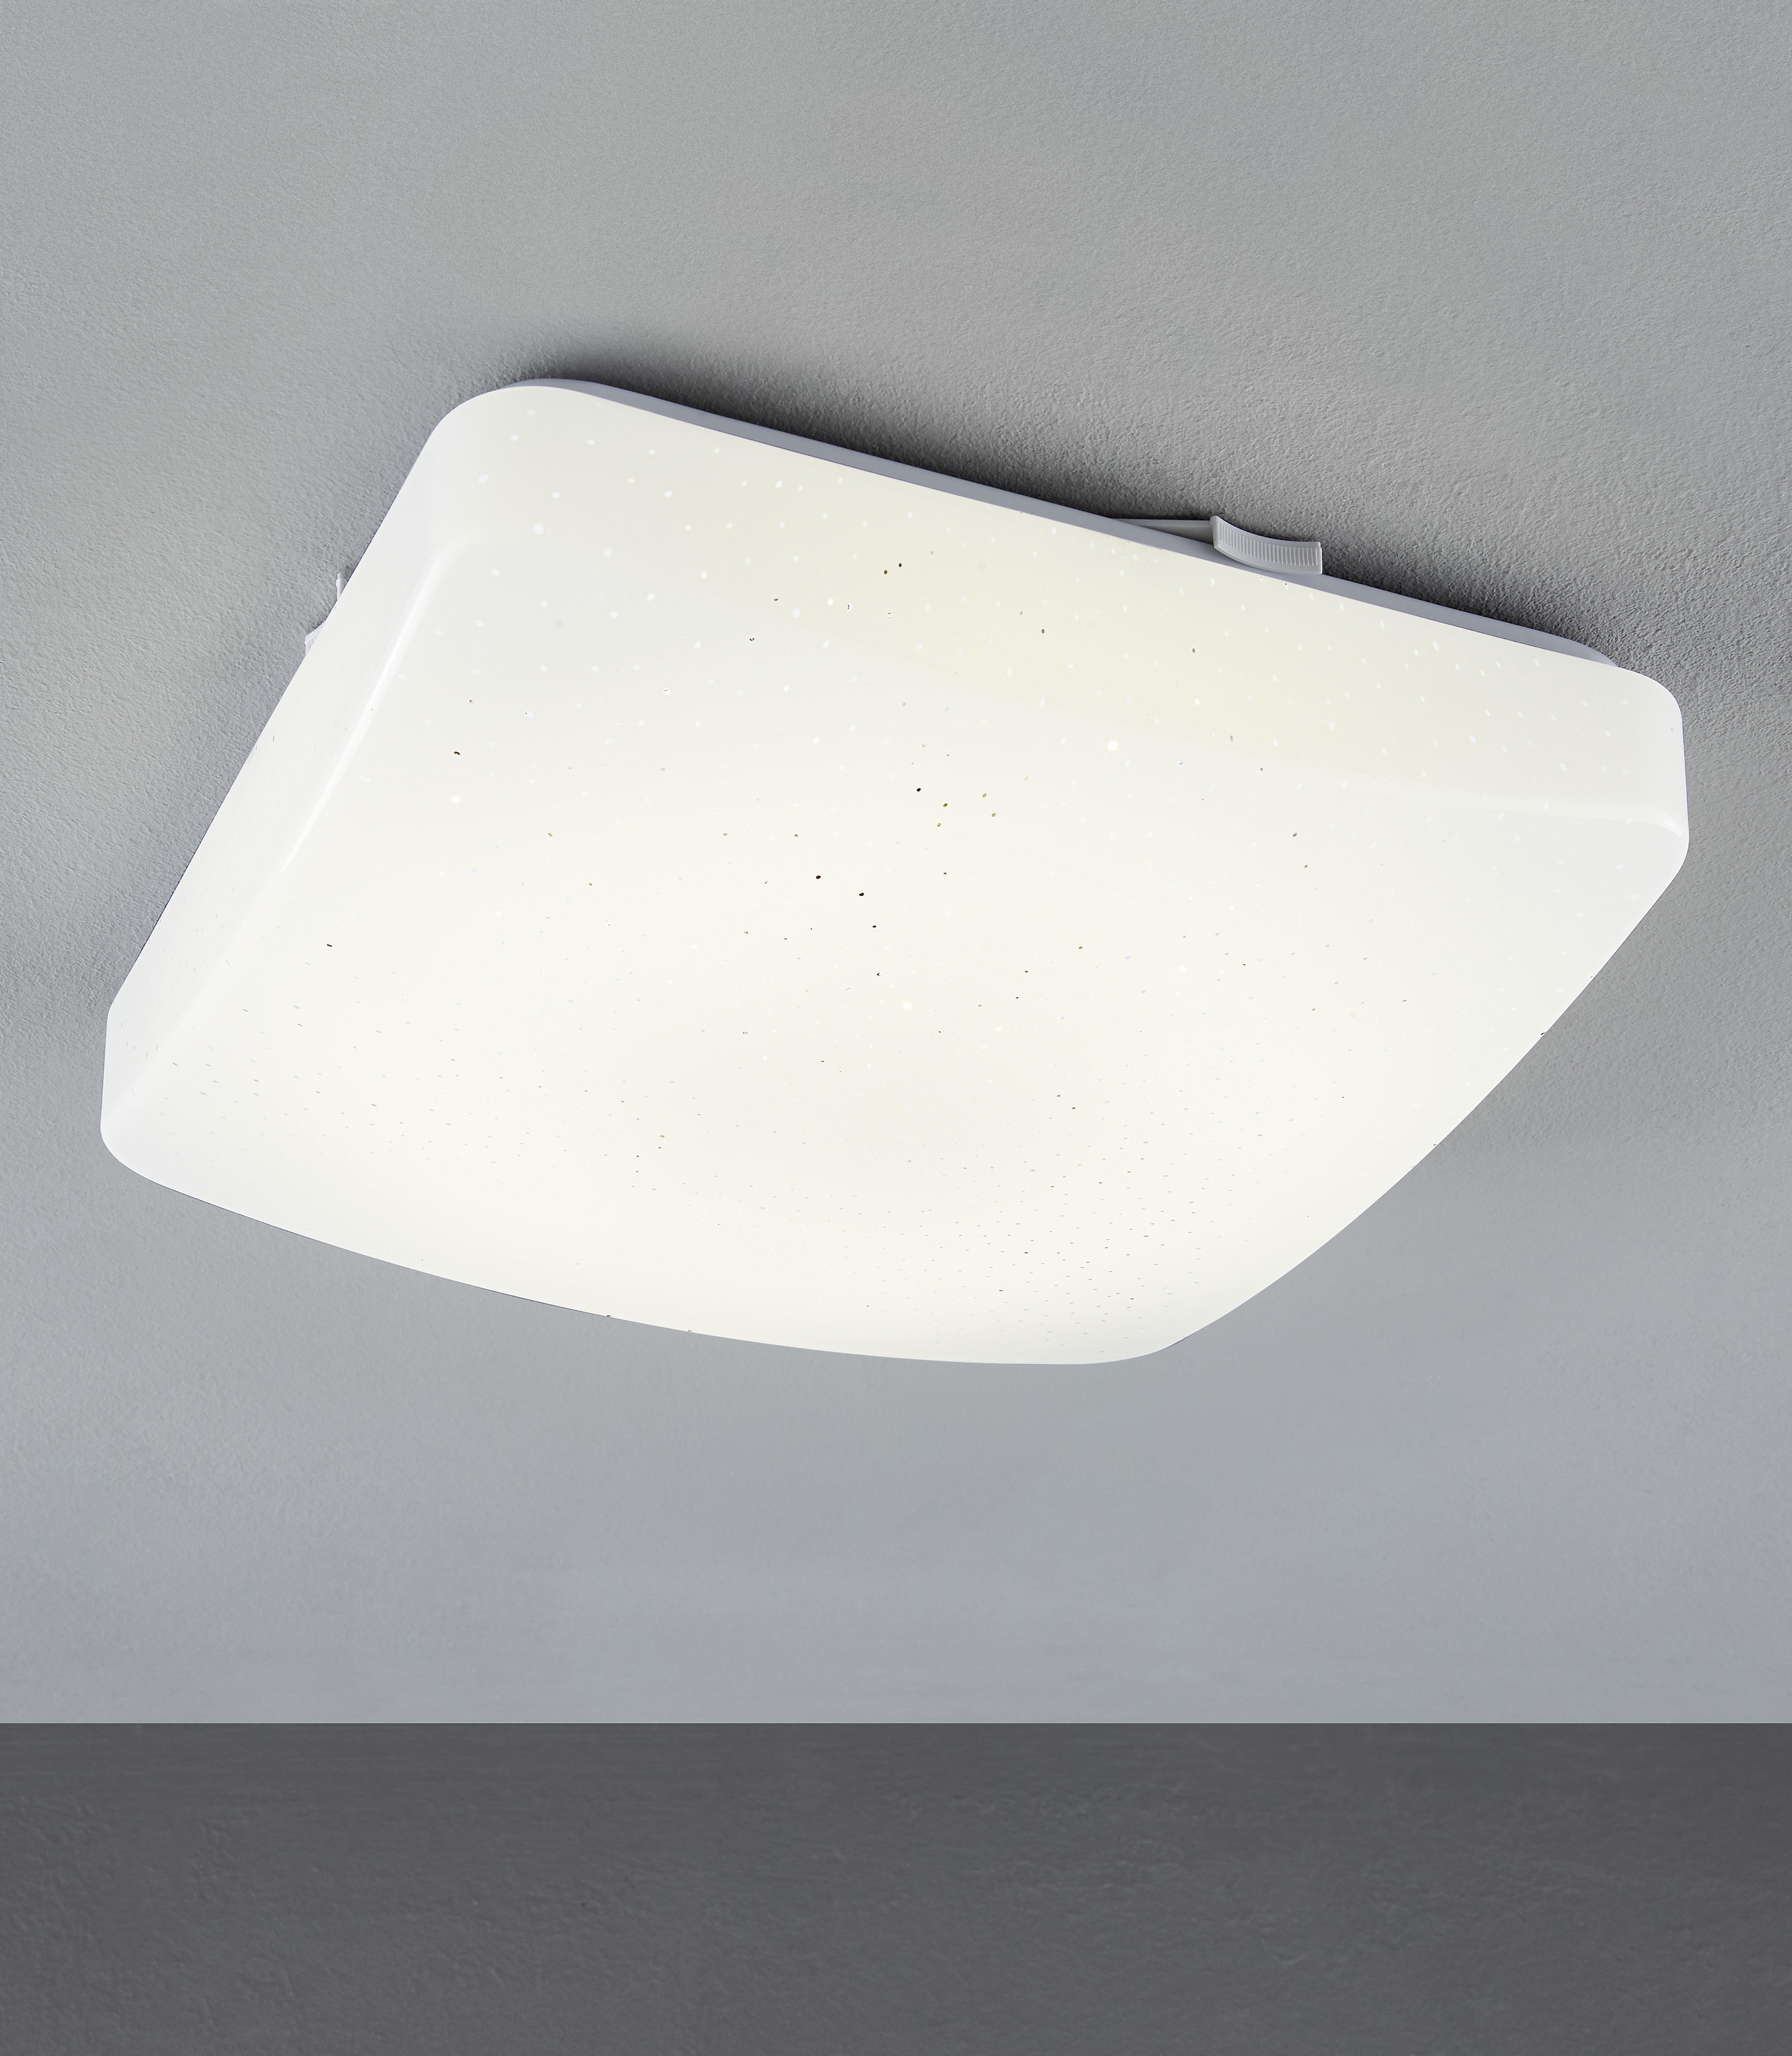 LED STROPNÁ LAMPA, 27/27/6 cm - biela, Basics, kov/plast (27/27/6cm) - Boxxx